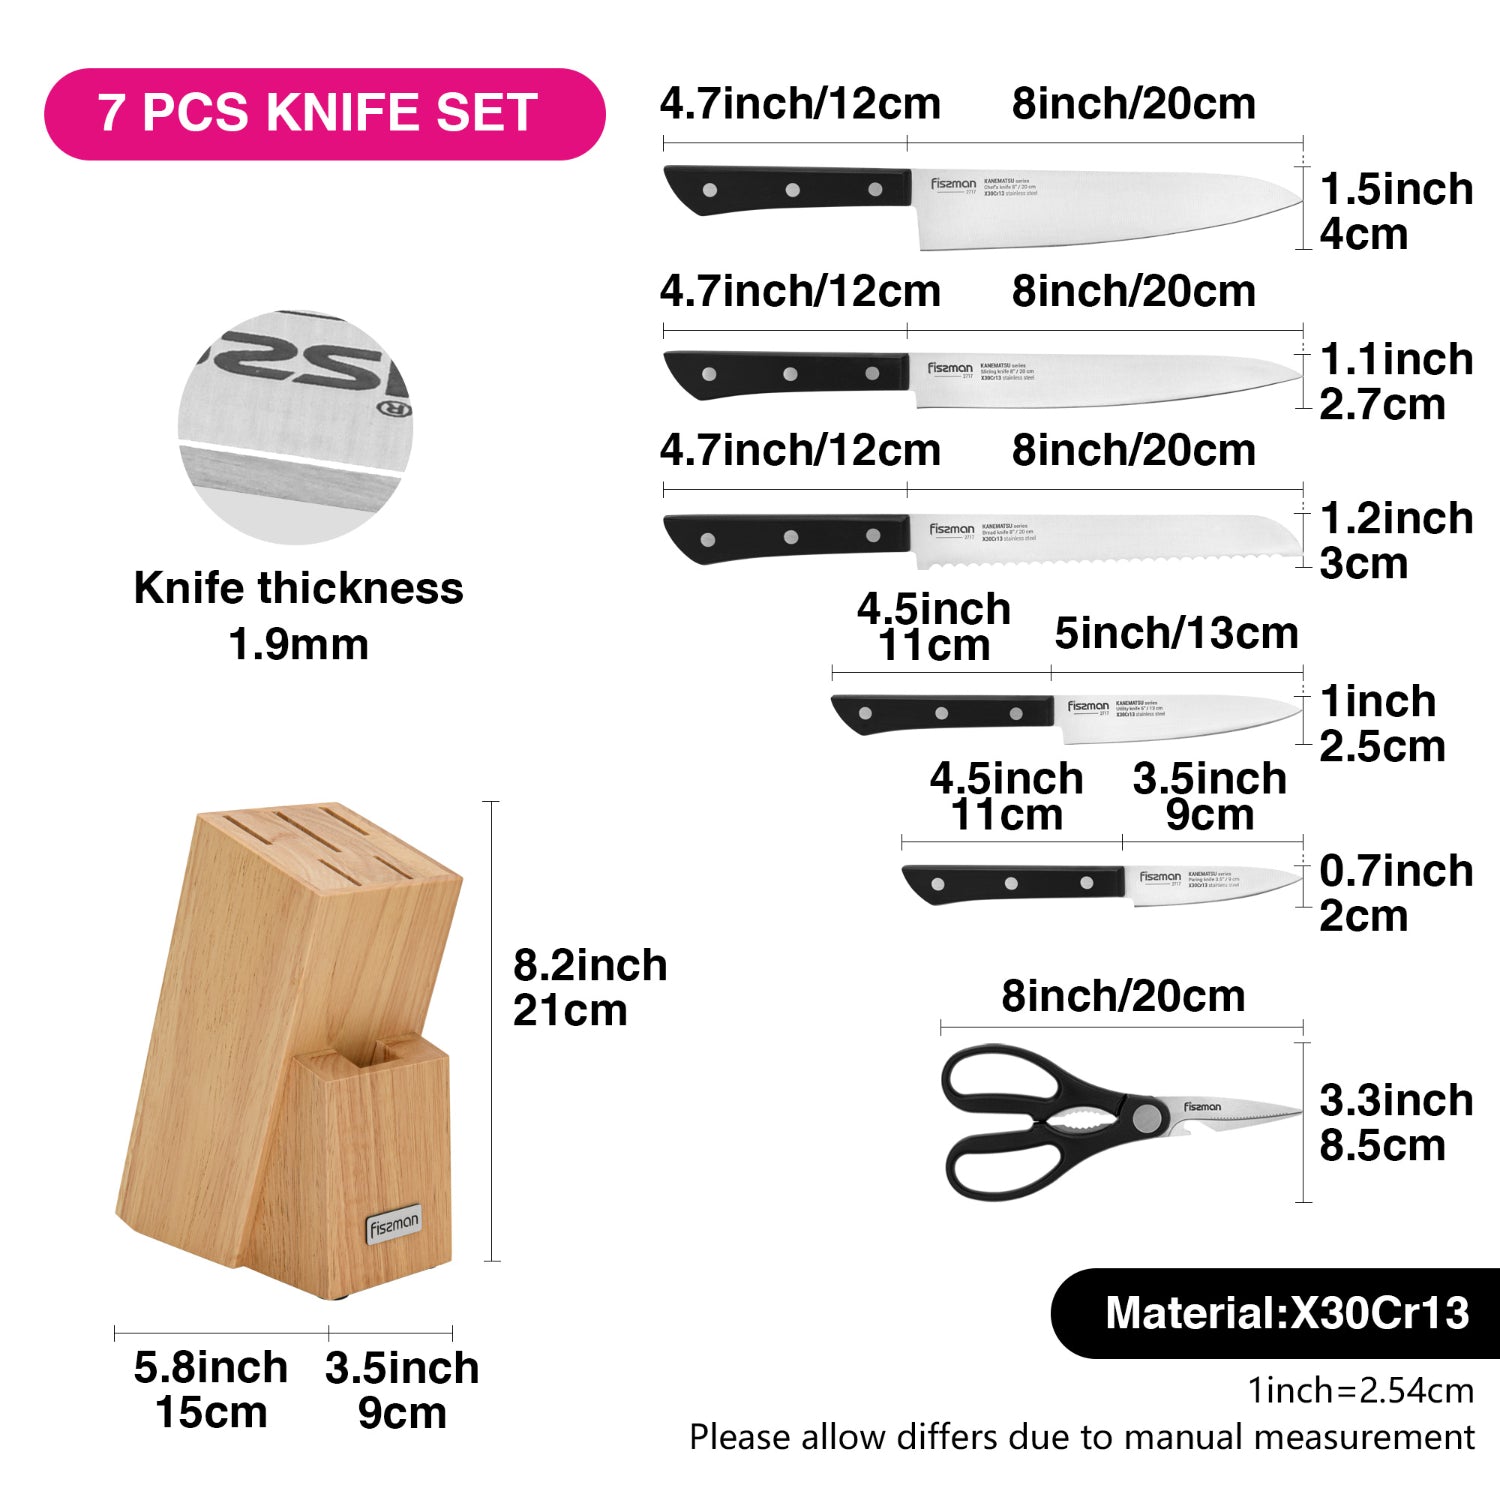 Fissman 7 Piece Knife Set Kanematsu with Wooden Block X30Cr13 Steel, Chef Knife 20cm, Slicing Knife 20cm,Bread Knife 20cm,Utility Knife 13cm,Pairing Knife 9cm,MultiFunctional Scissor 20cm